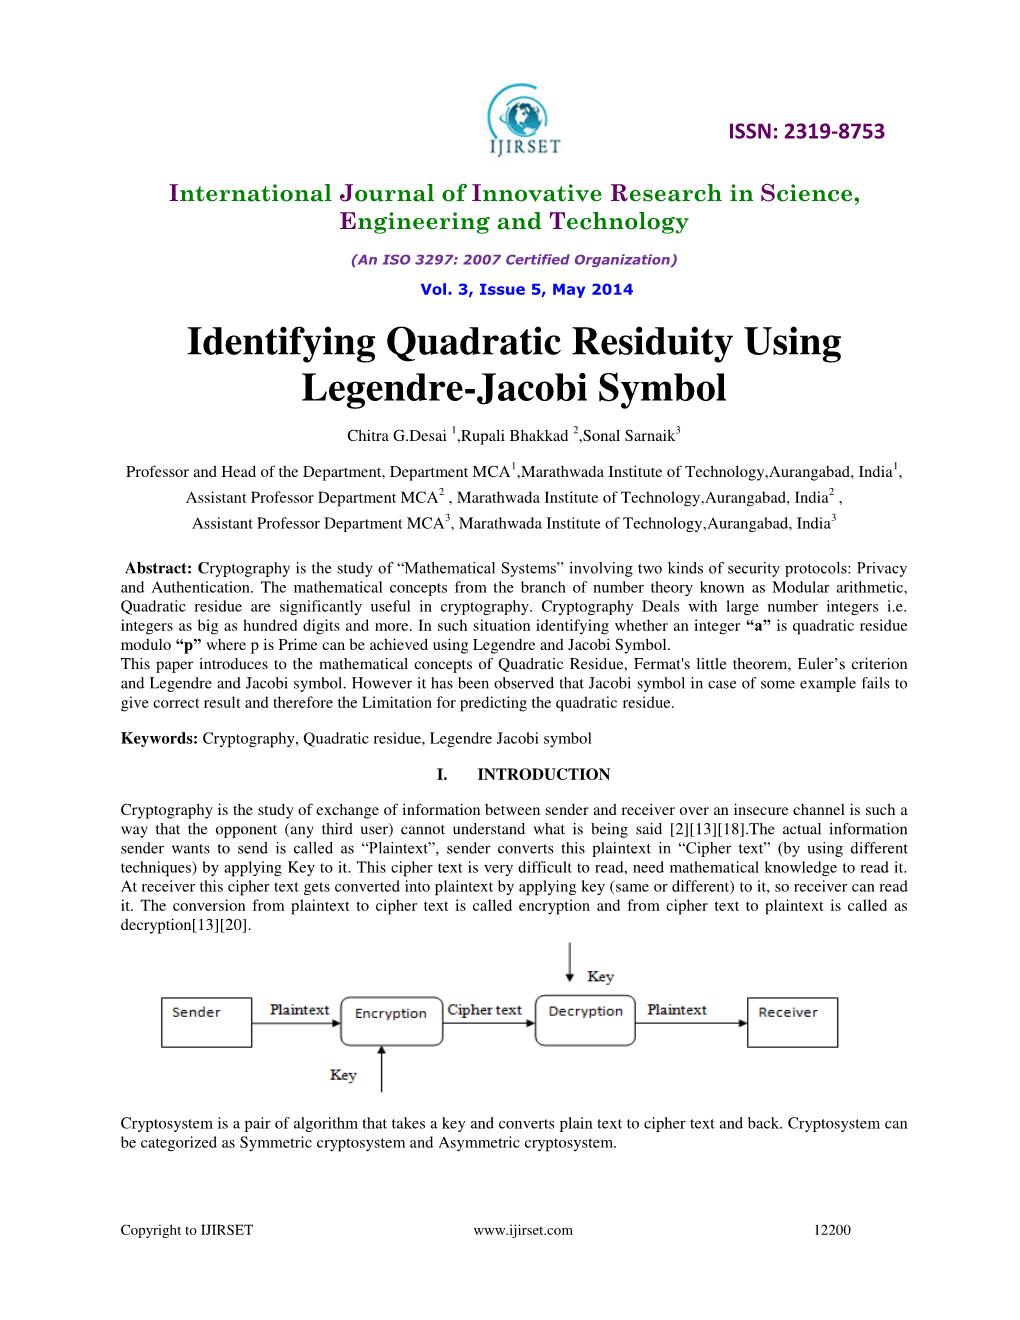 Identifying Quadratic Residuity Using Legendre-Jacobi Symbol